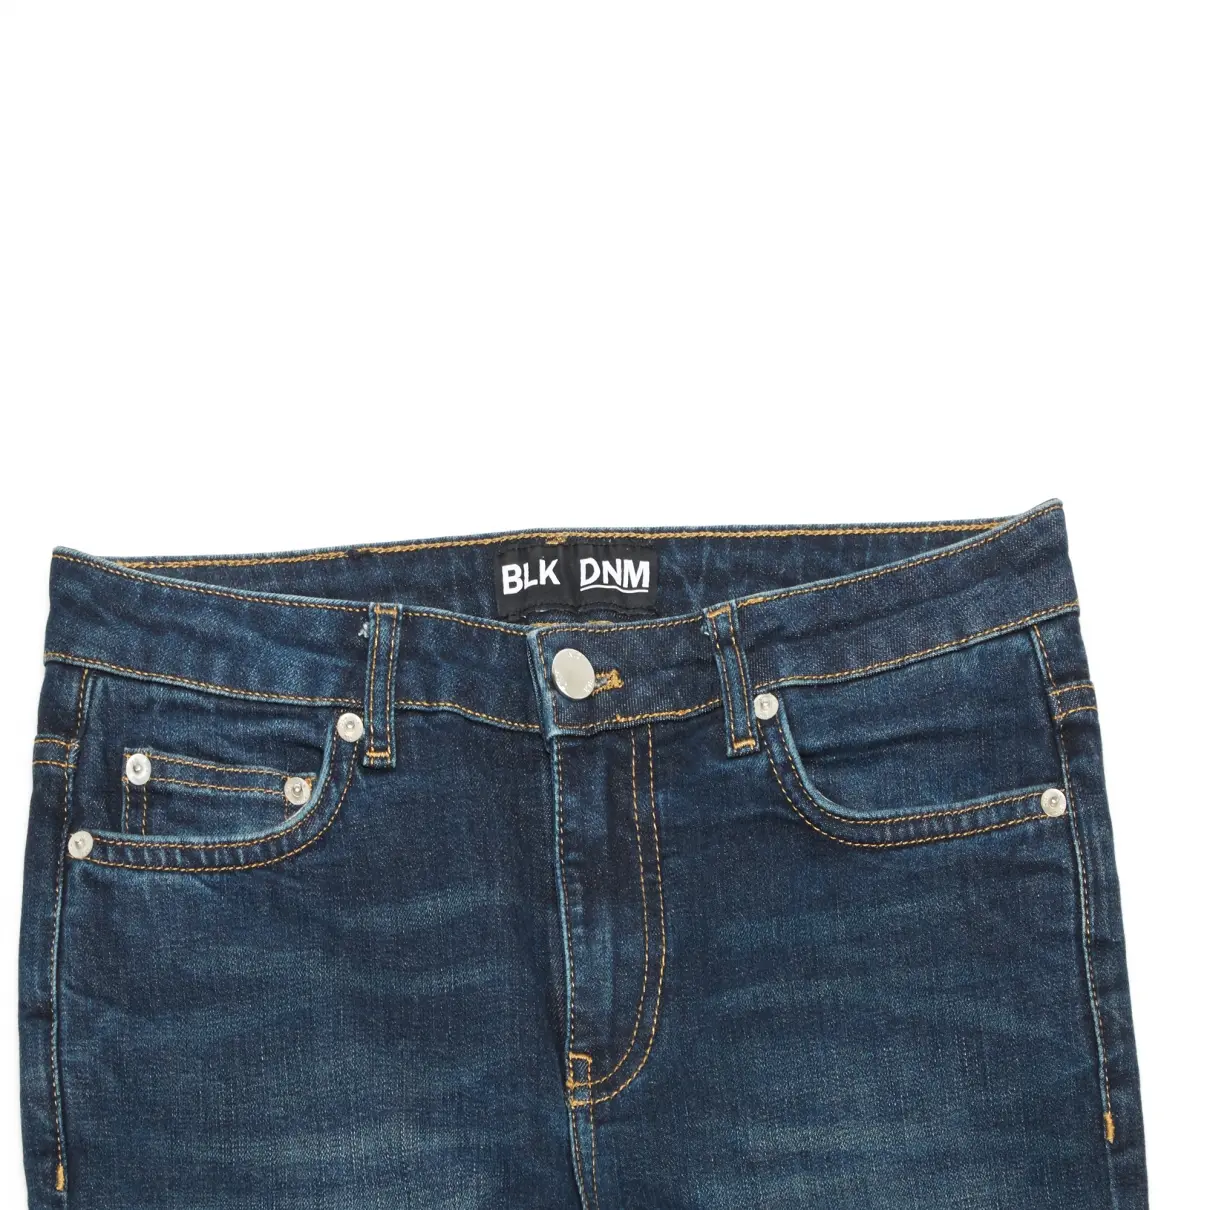 Buy Blk Dnm Slim jeans online